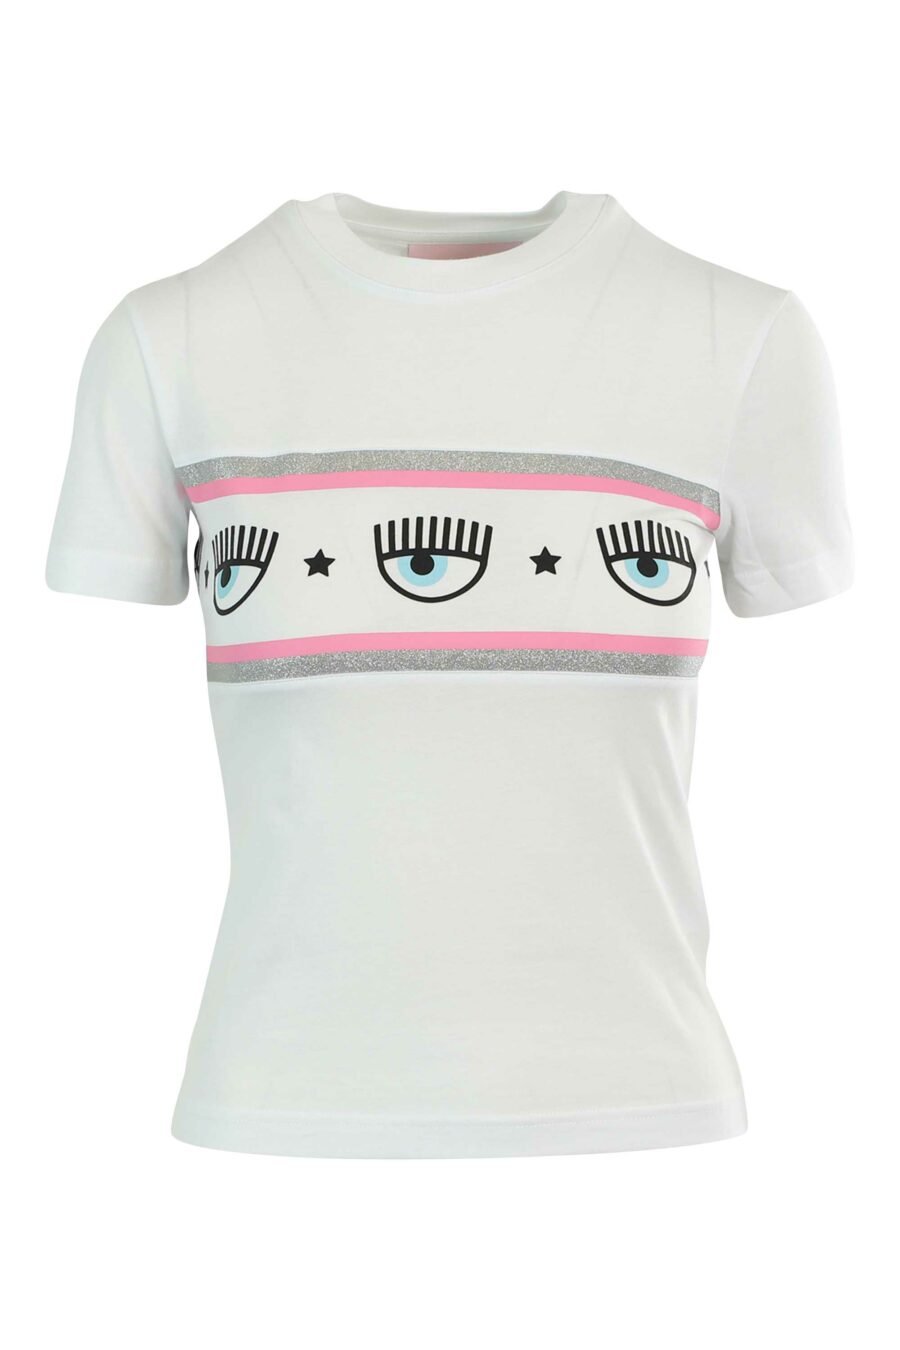 White T-shirt with eye logo on ribbon - 8052672419835